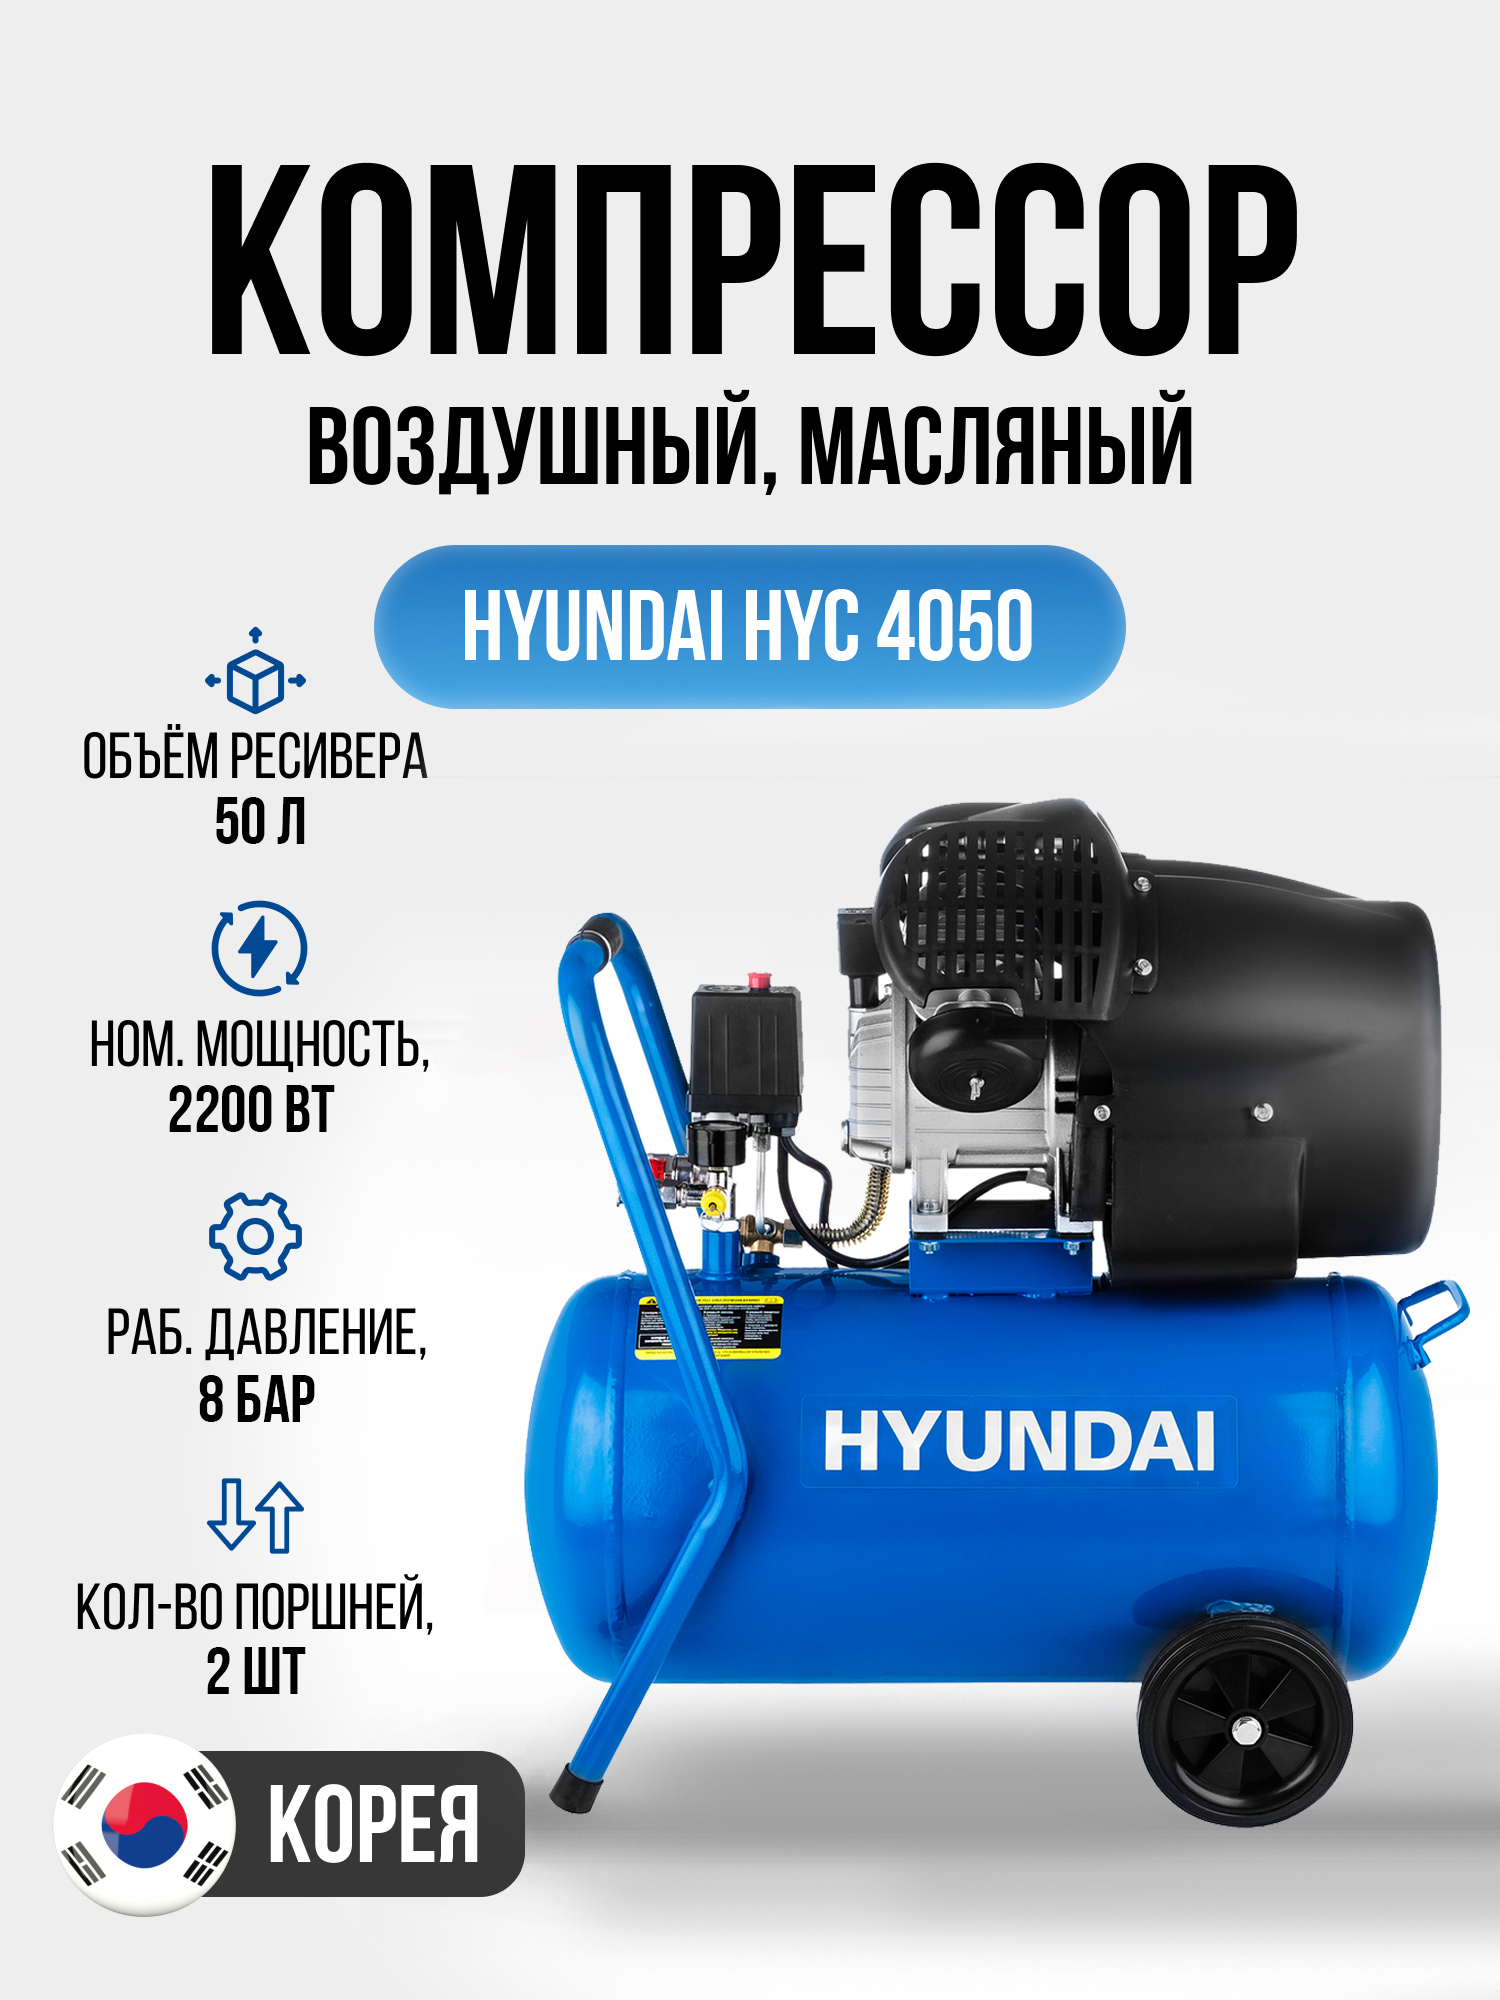 Компрессор hyundai hyc 3050s. Hyundai Hy 1535. Компрессор Hyundai 50 литров.